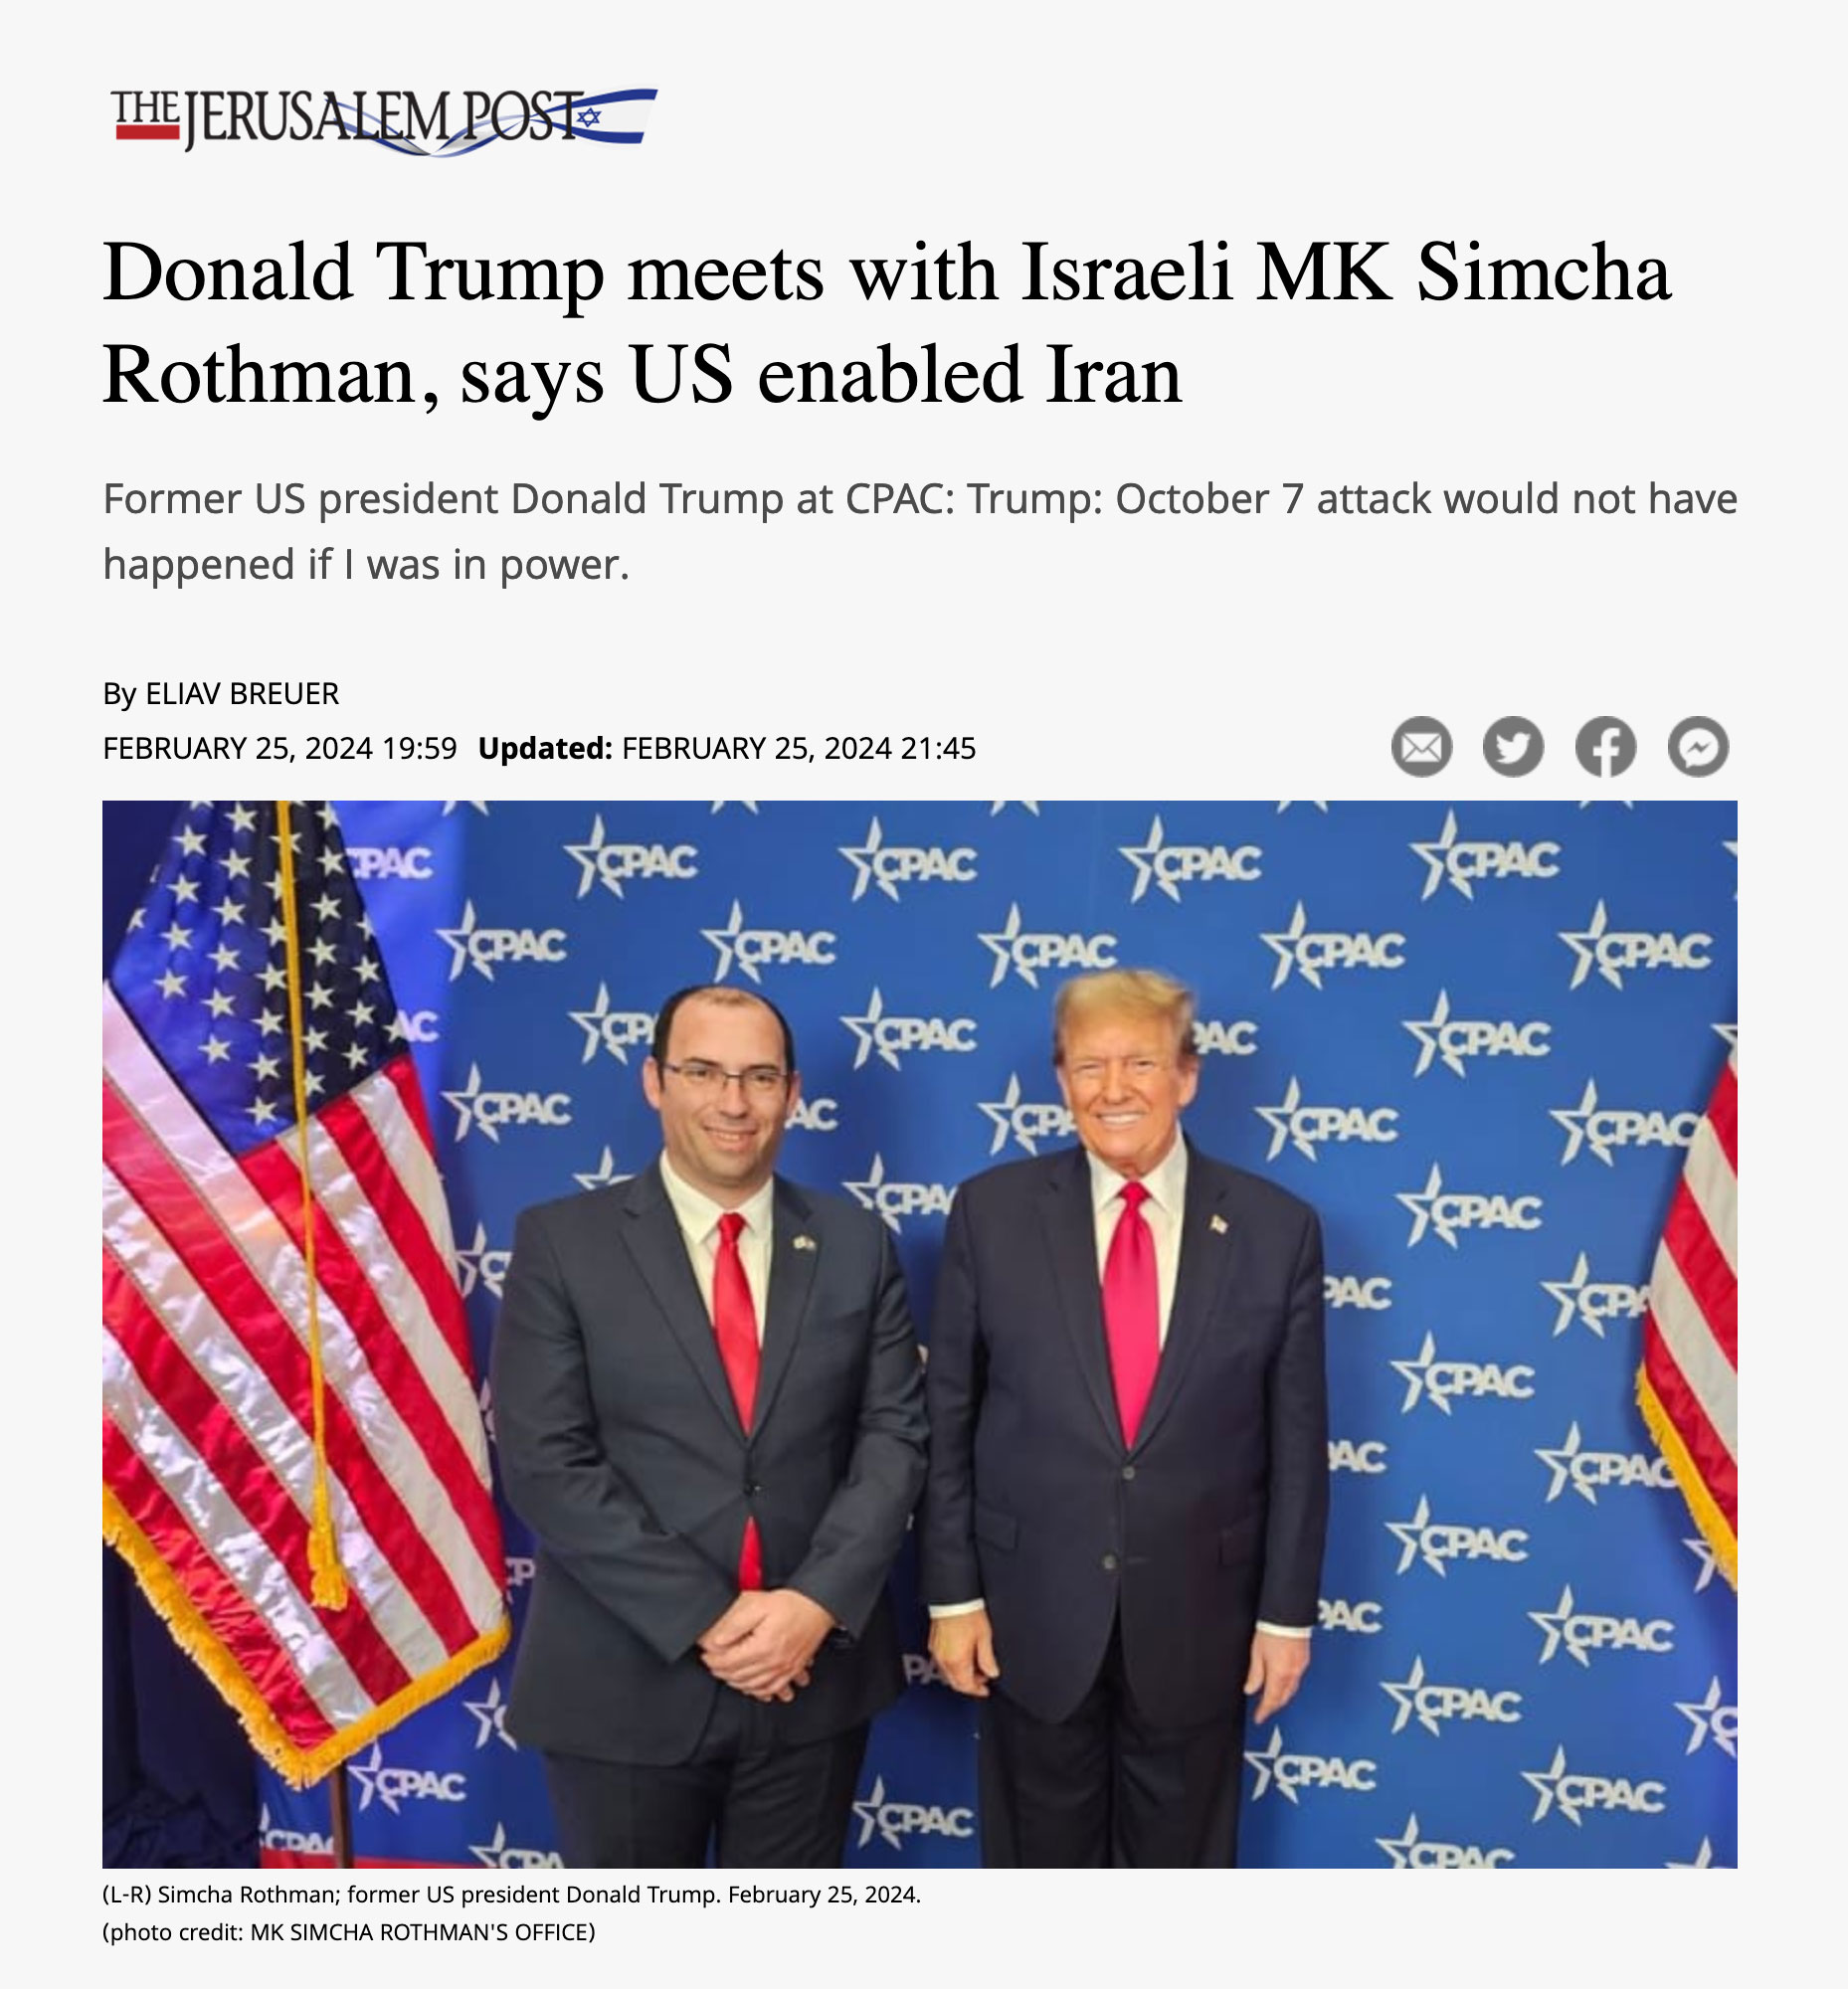 Donald Trump meets with Israeli MK Simcha Rothman, says US enabled Iran